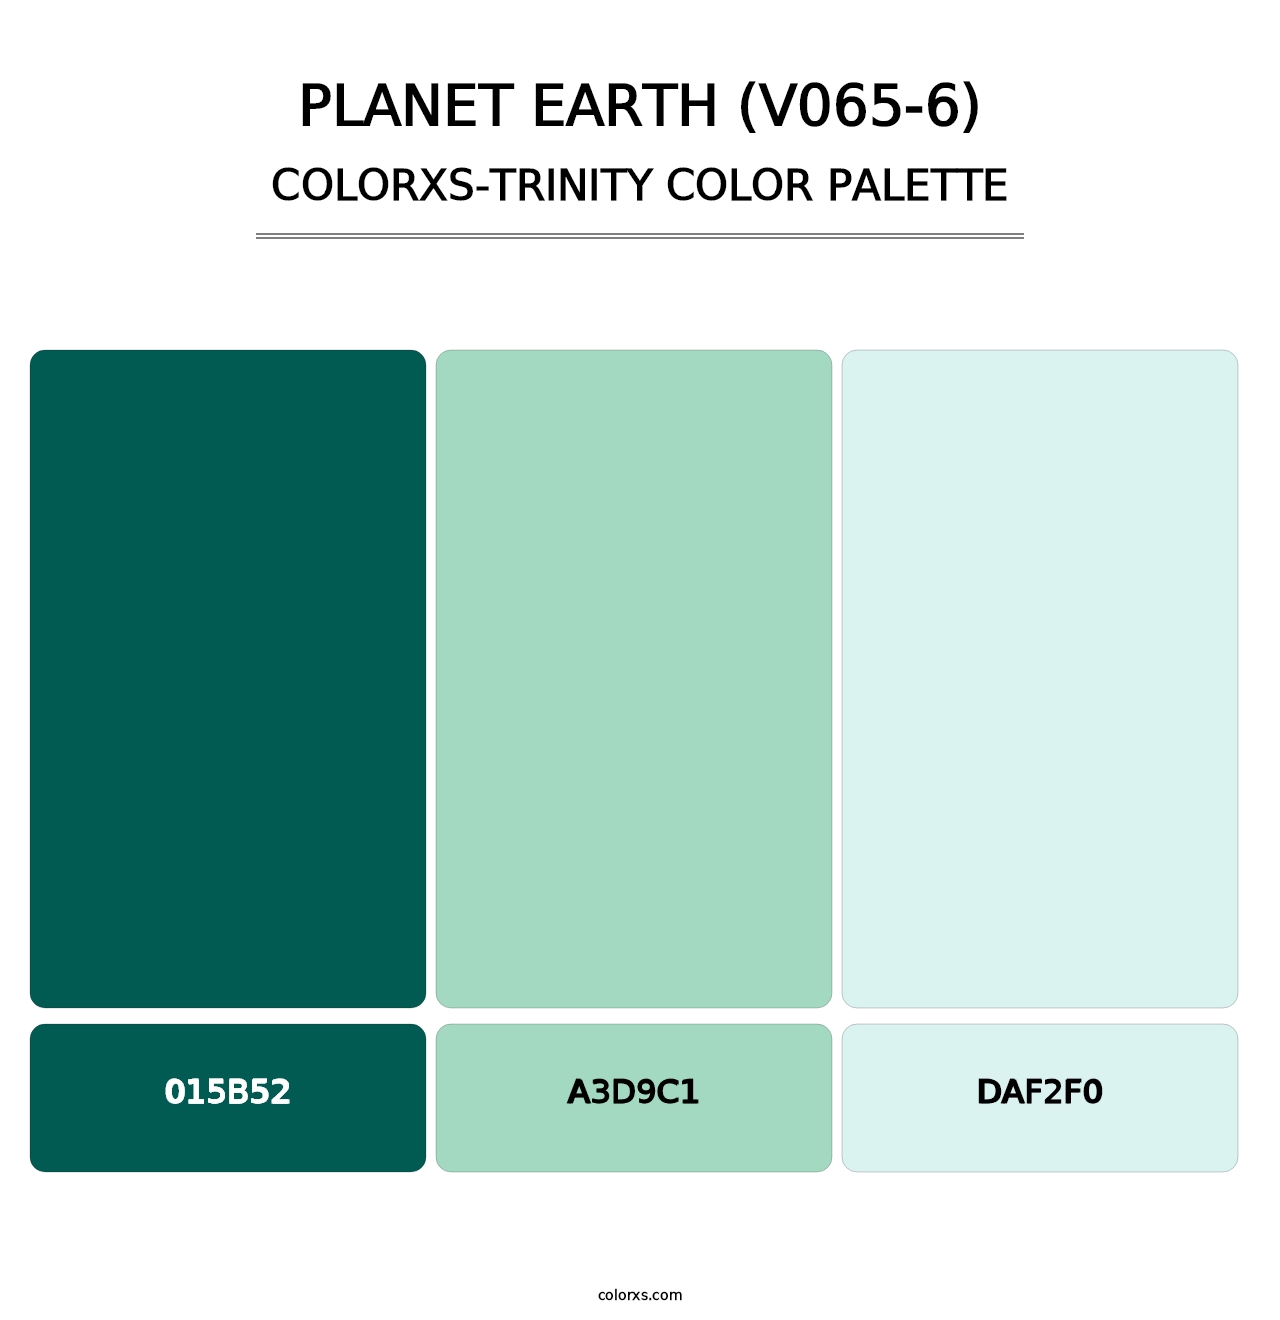 Planet Earth (V065-6) - Colorxs Trinity Palette